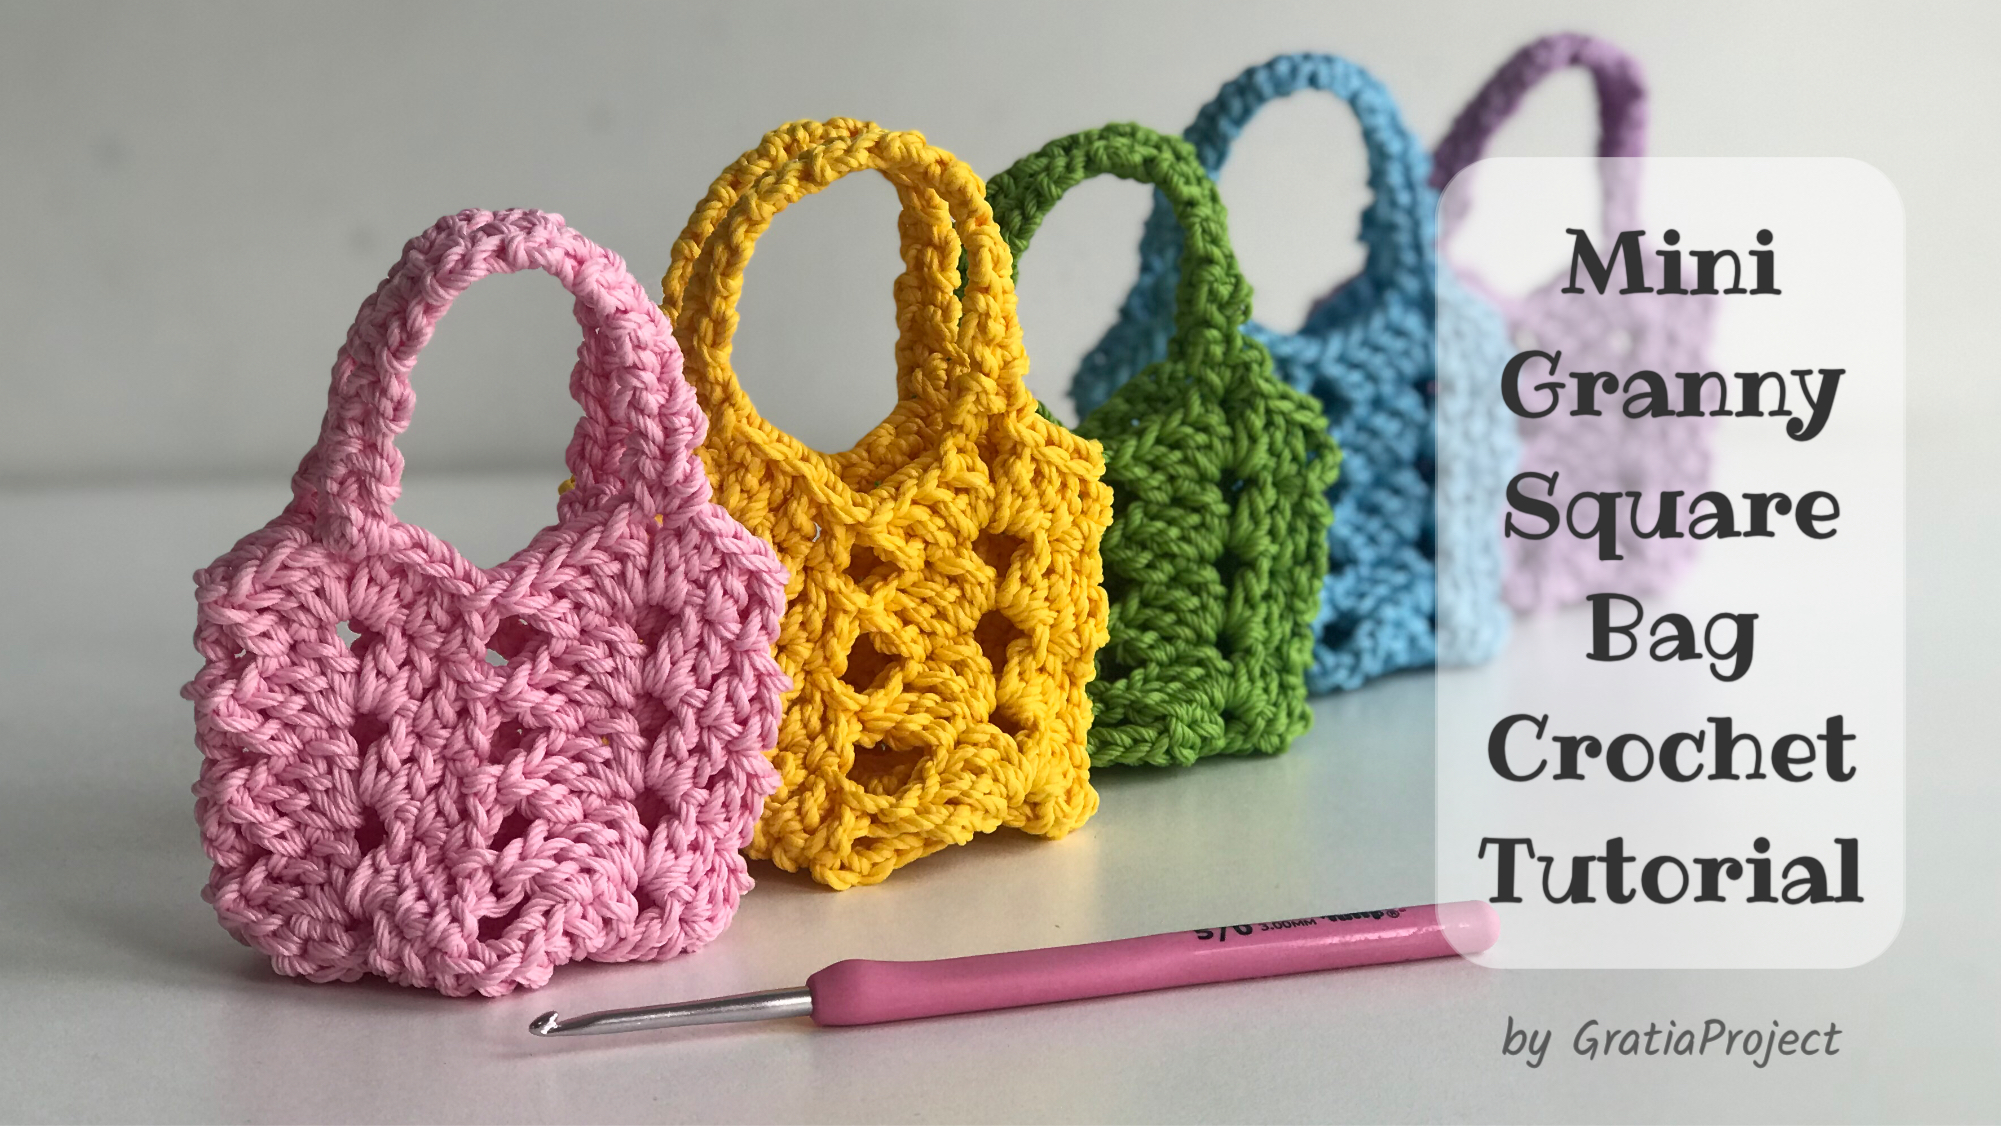 Mini Granny Square Bag Crochet Tutorial